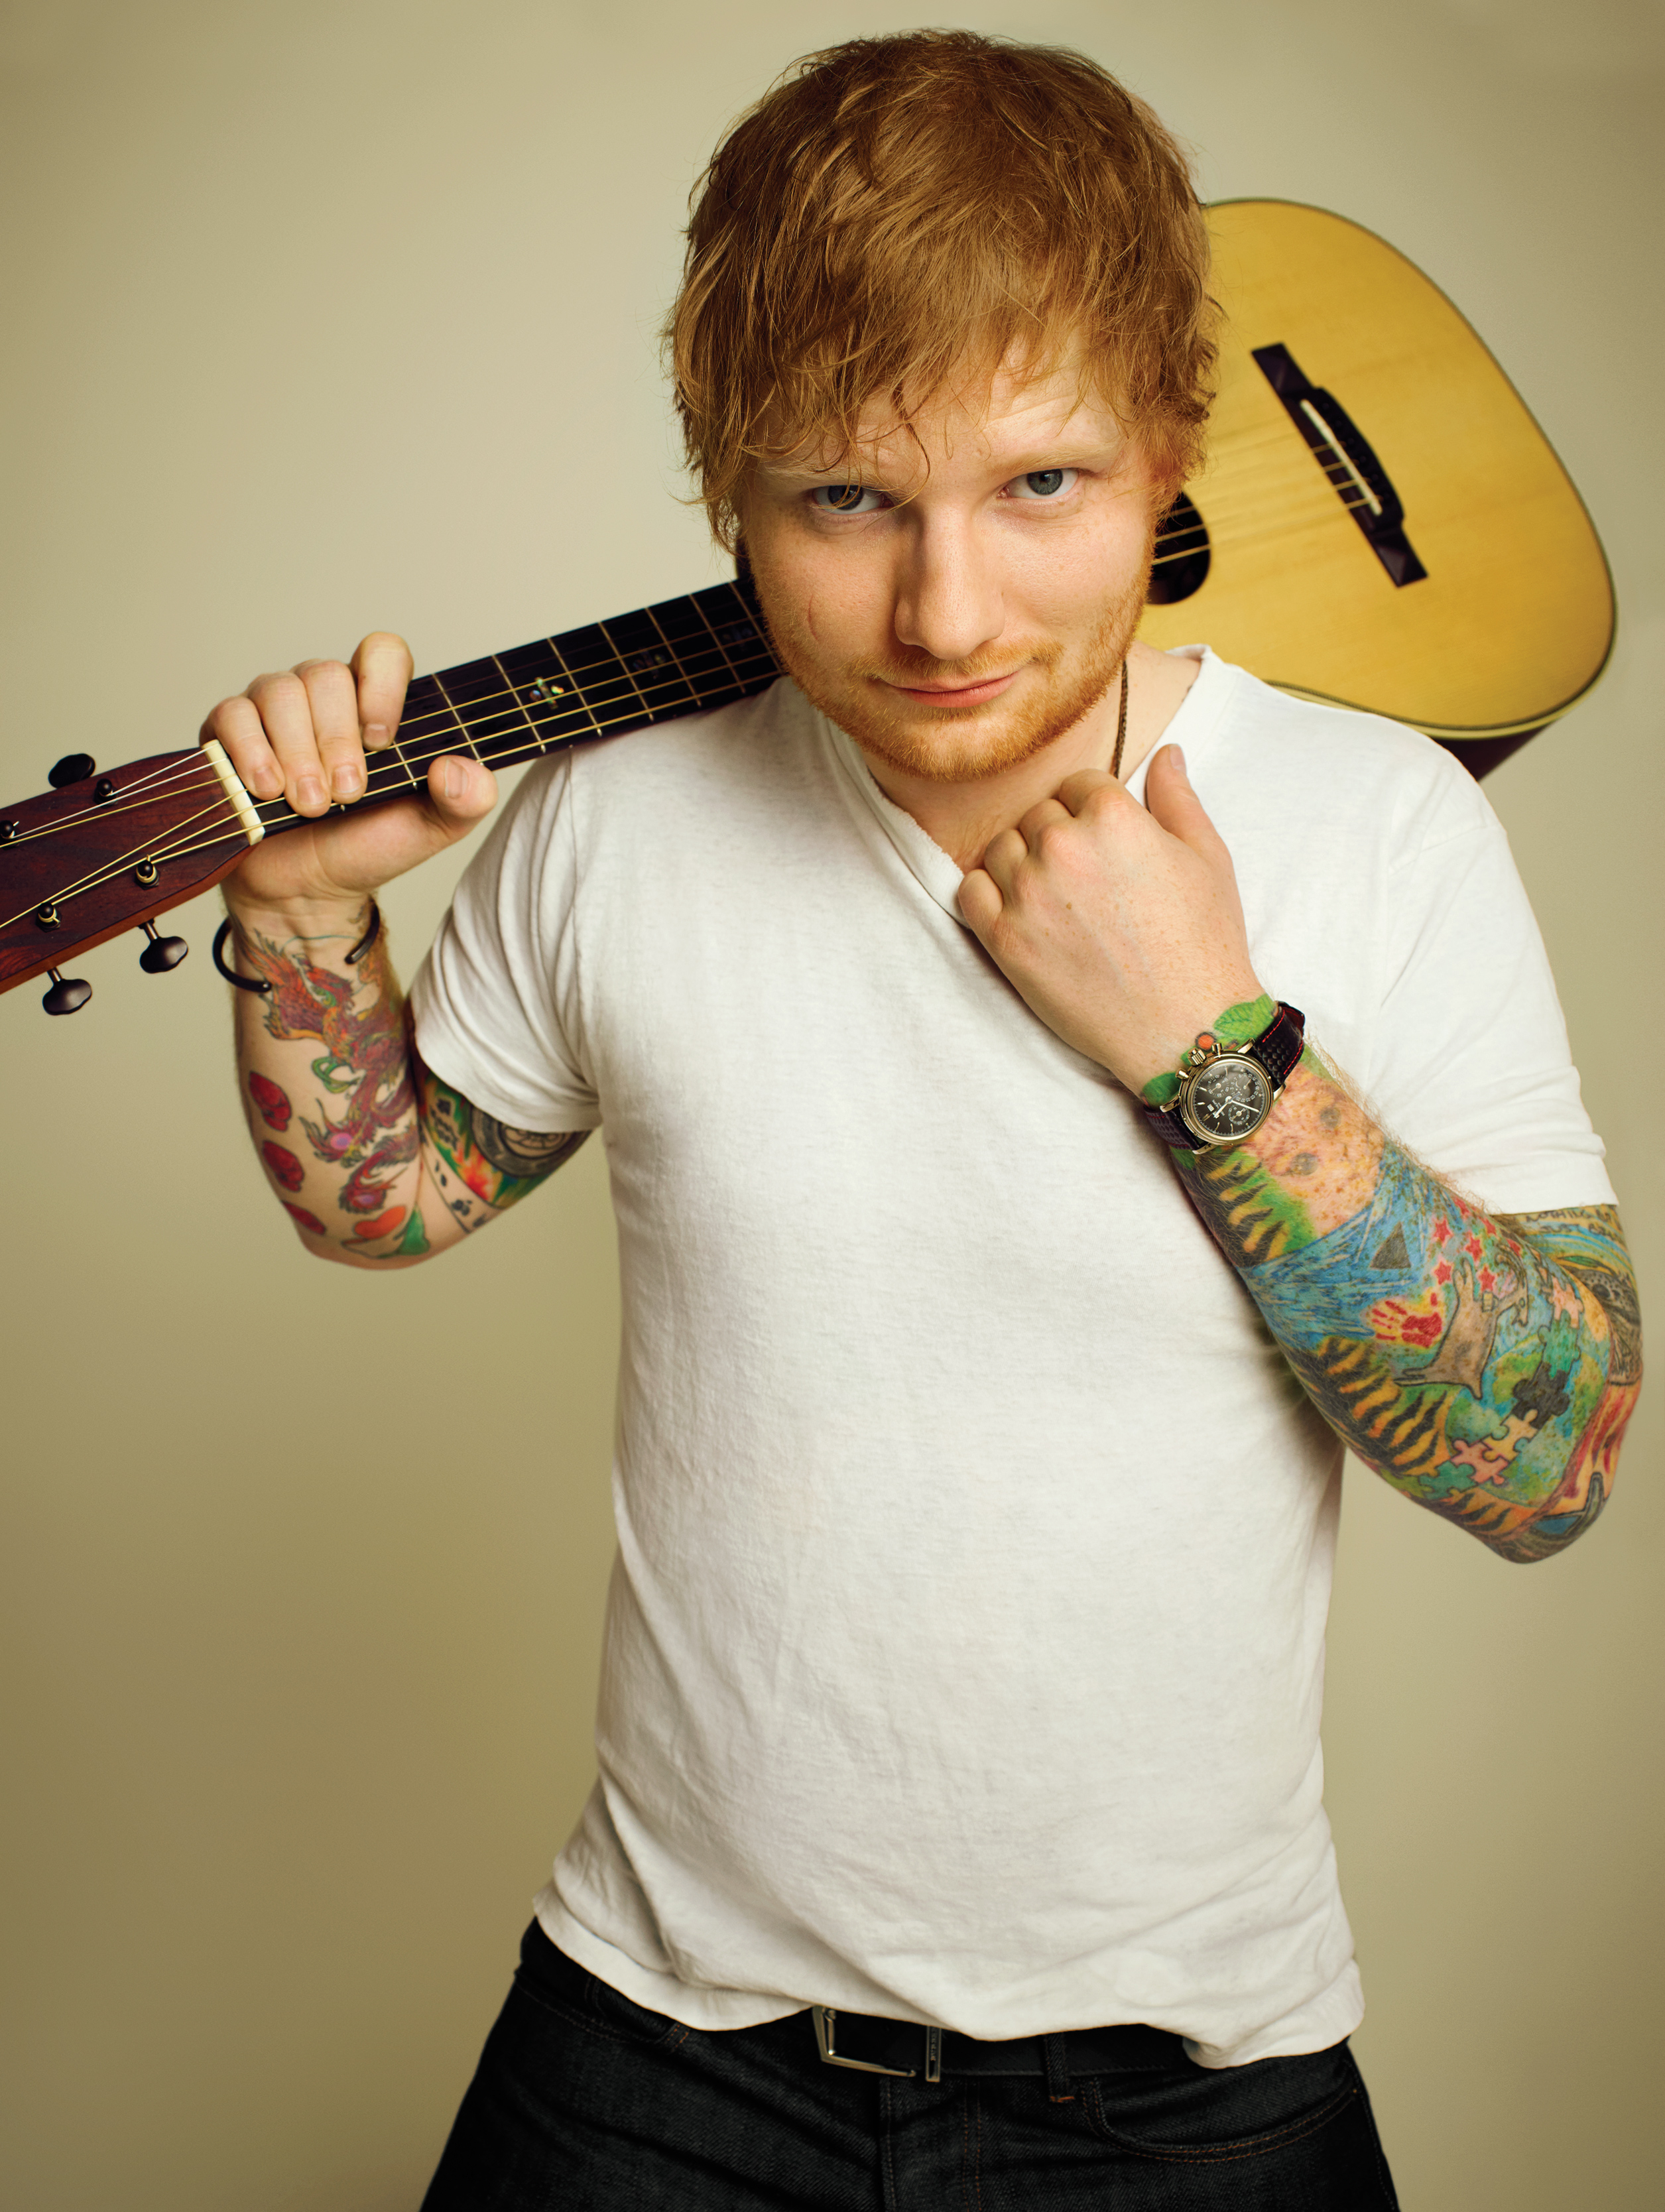 Ed Sheeran Be My Husband chords